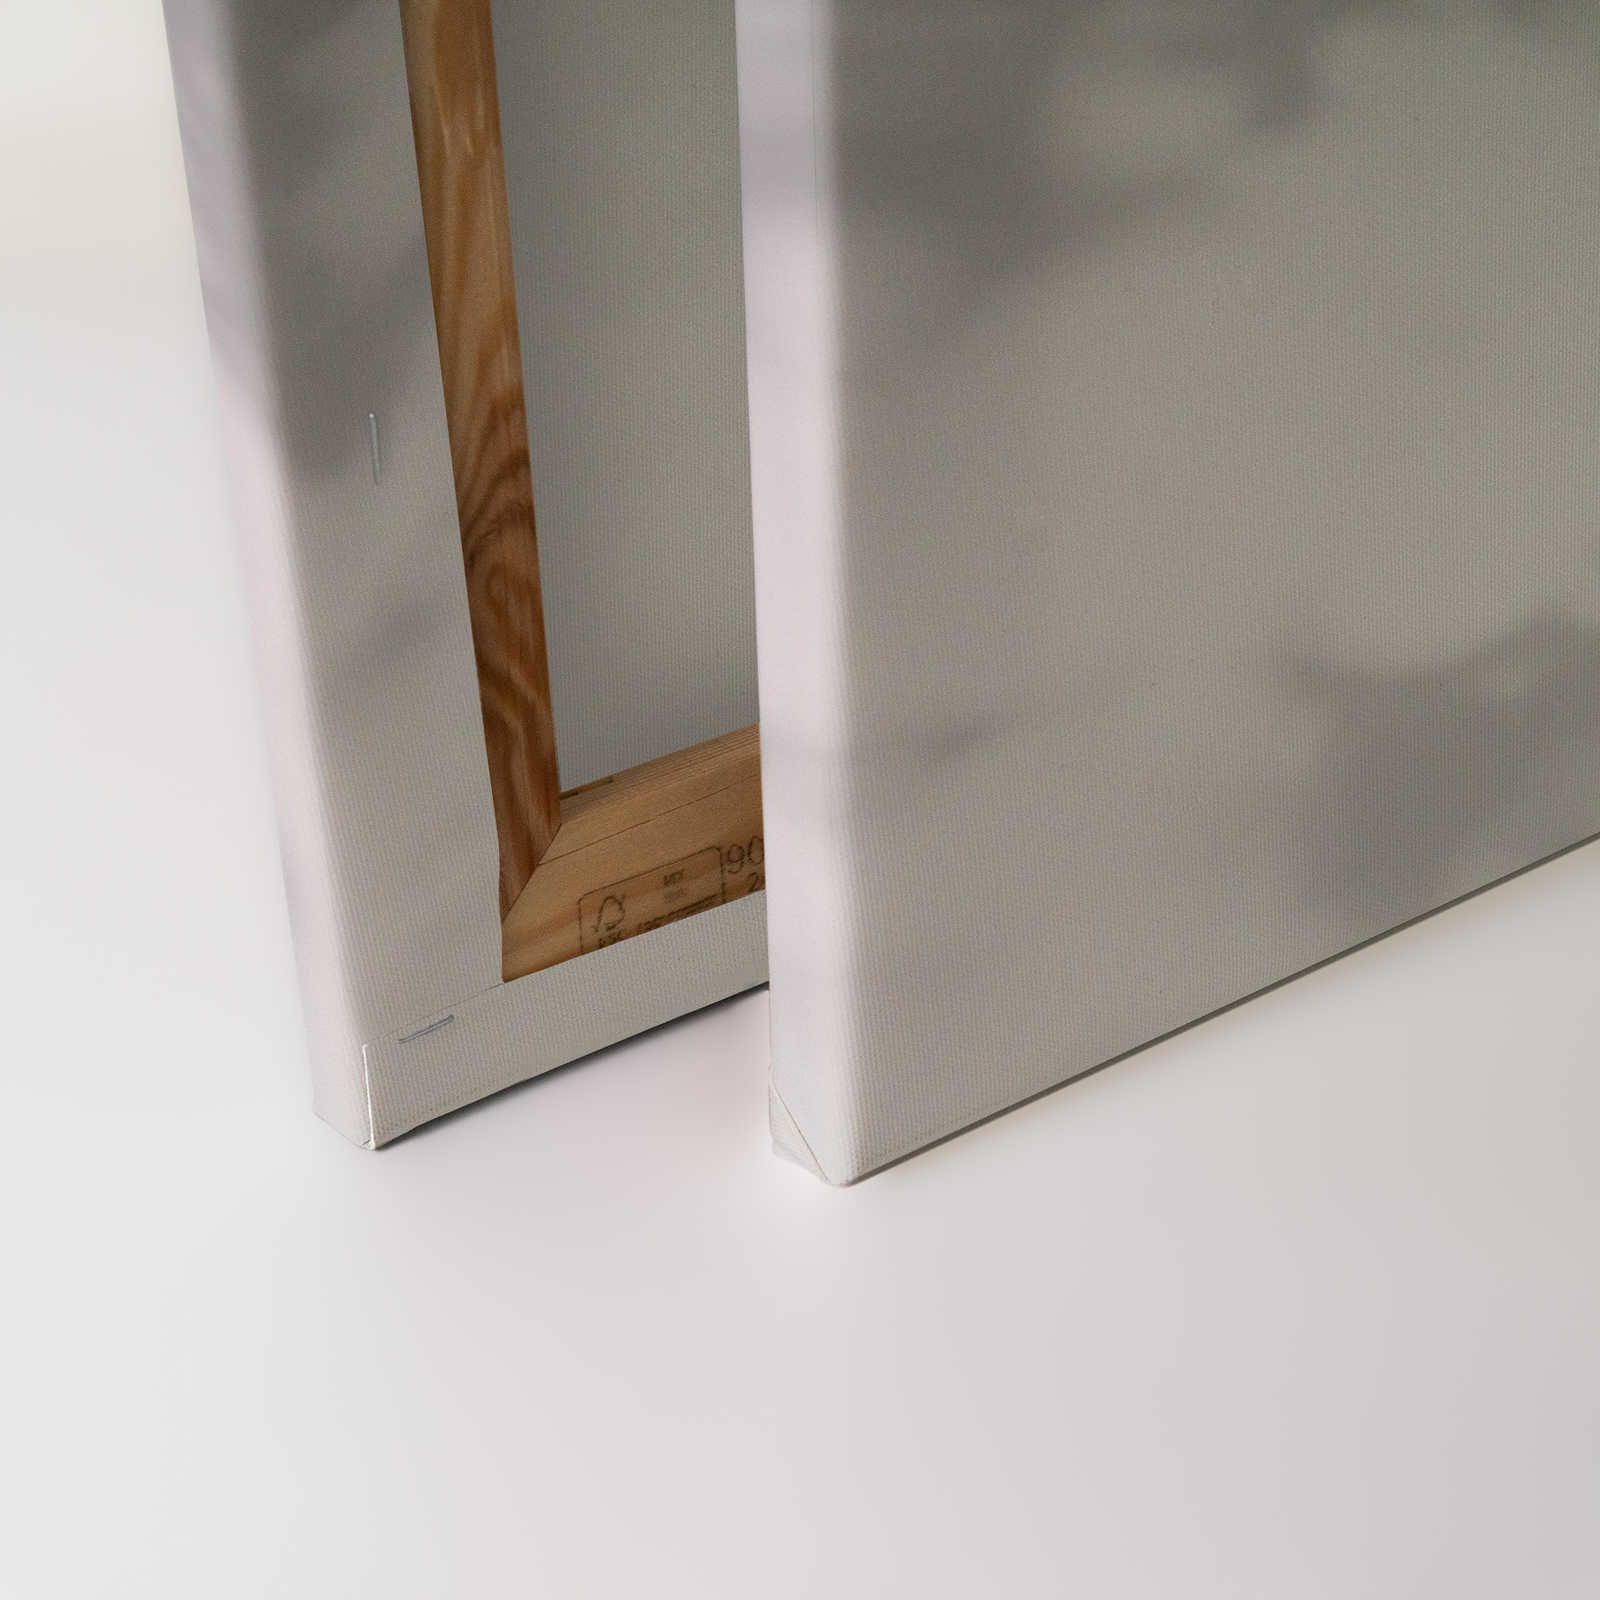             Light Room 1 - Leinwandbild Natur Schatten in Grau & Weiß – 0,90 m x 0,60 m
        